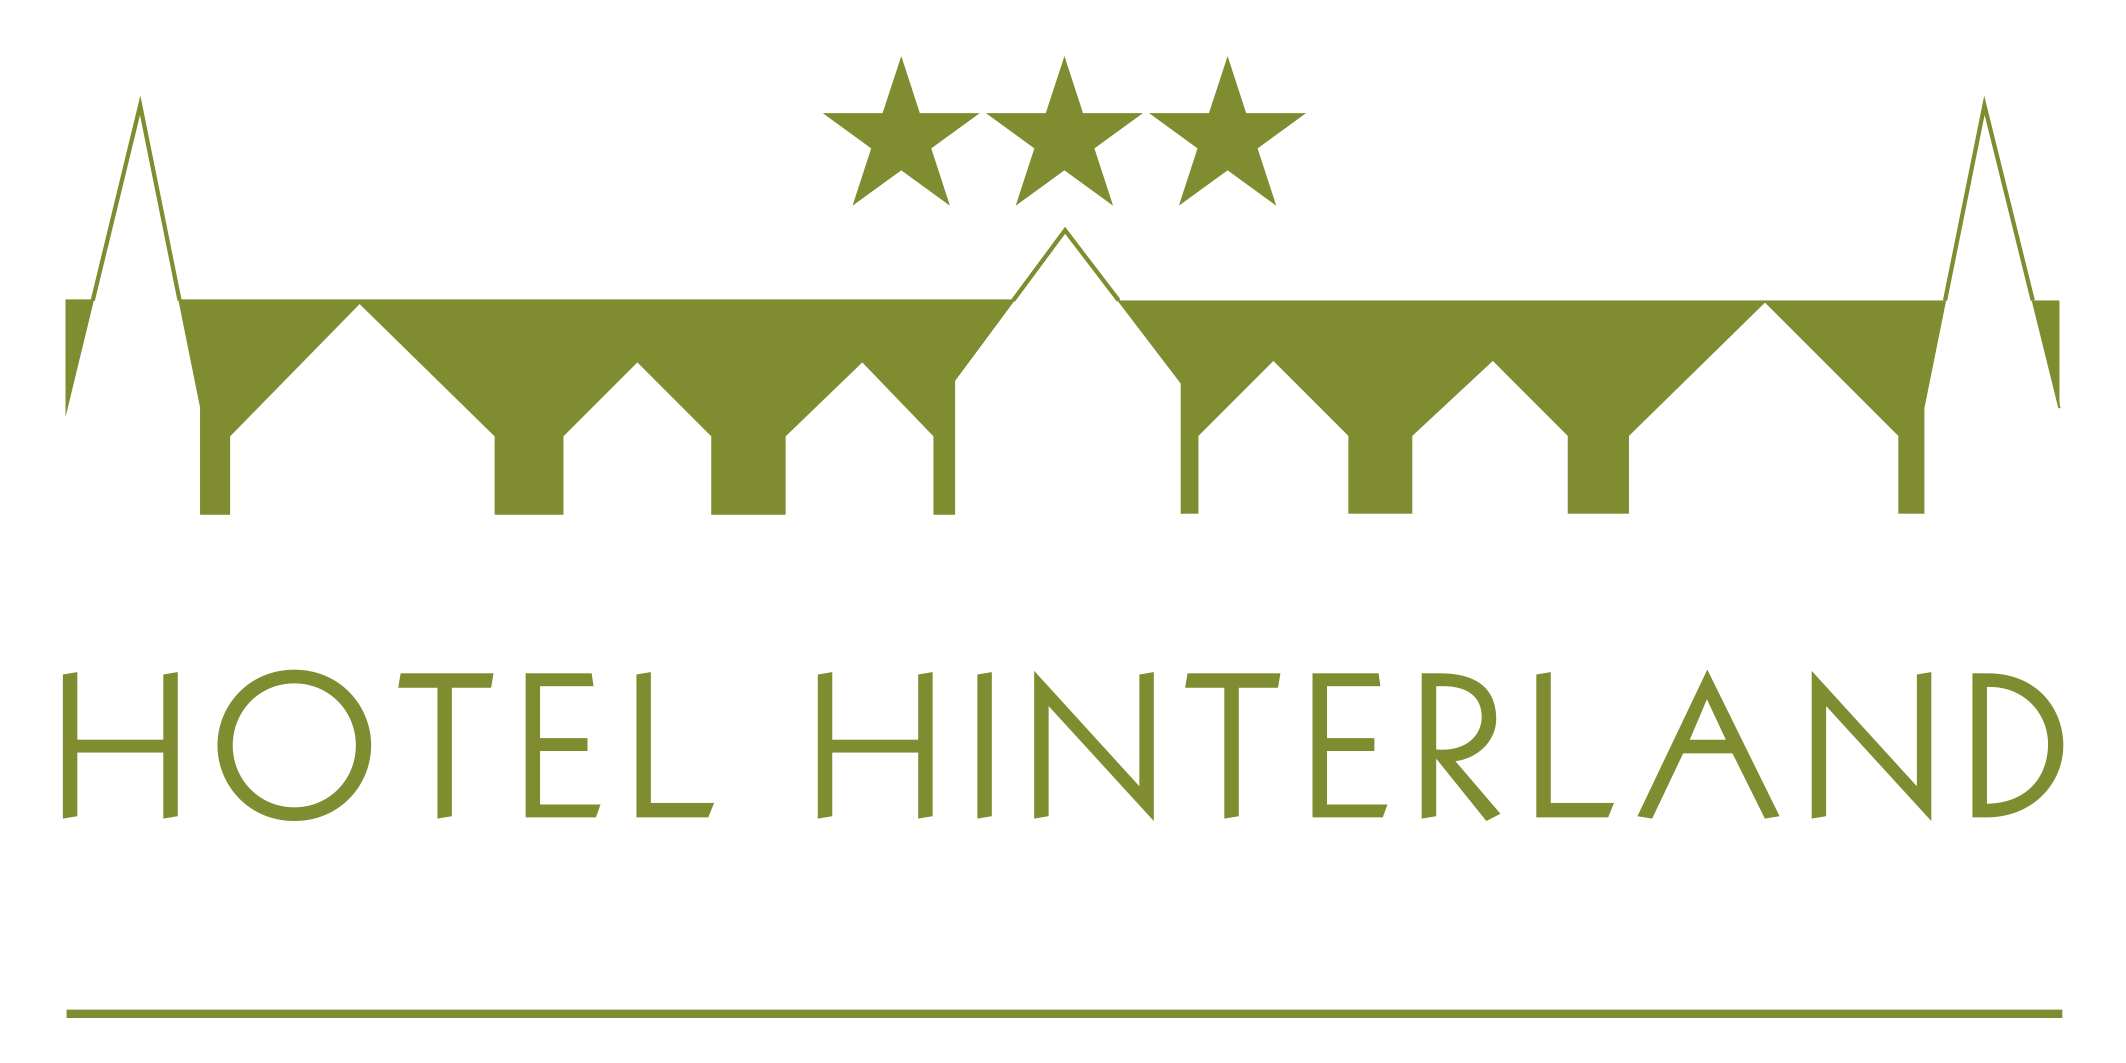 Hotel Hinterland def